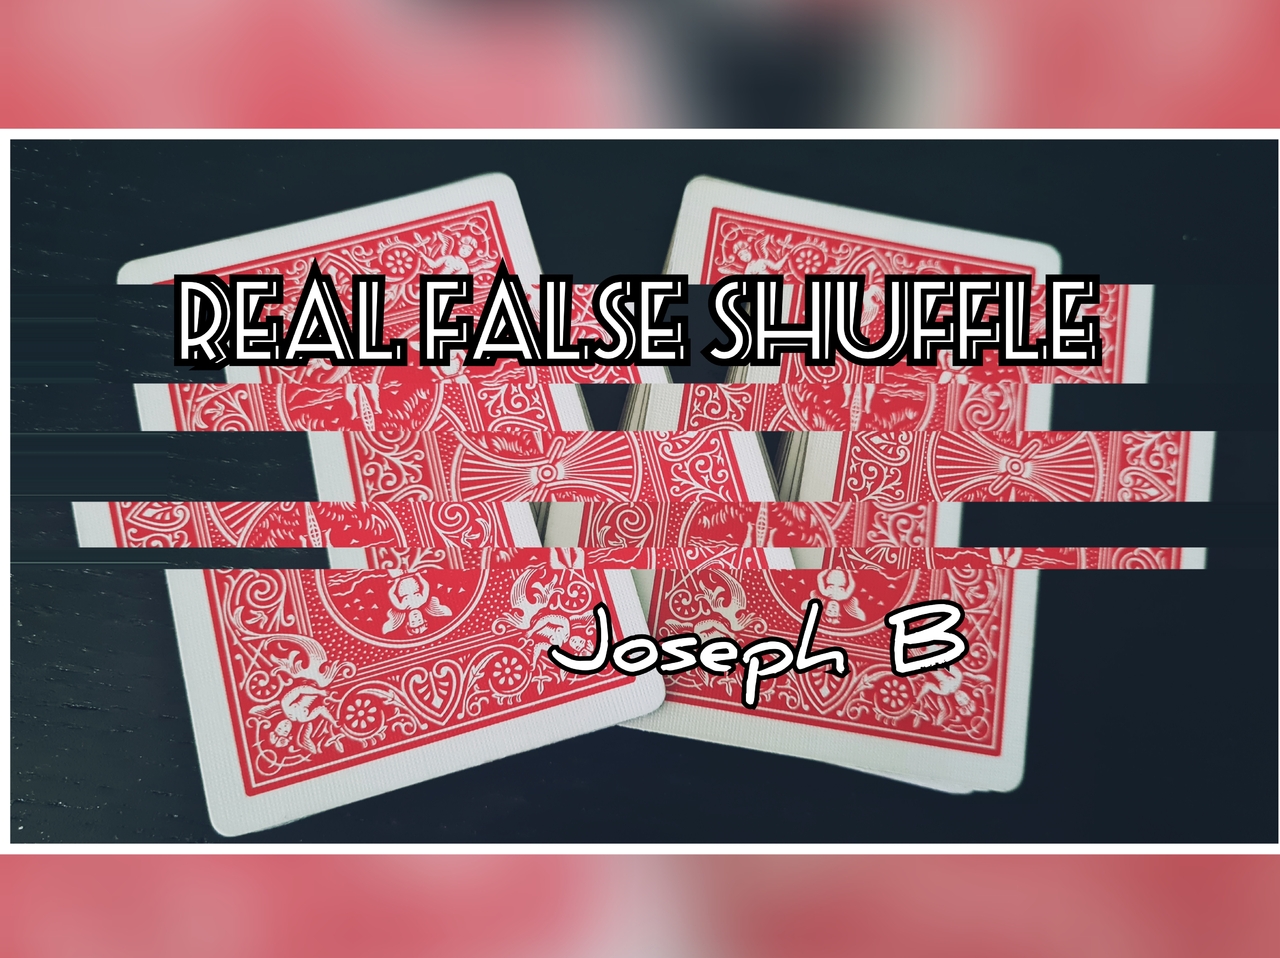 Joseph B. - REAL FALSE SHUFFLE